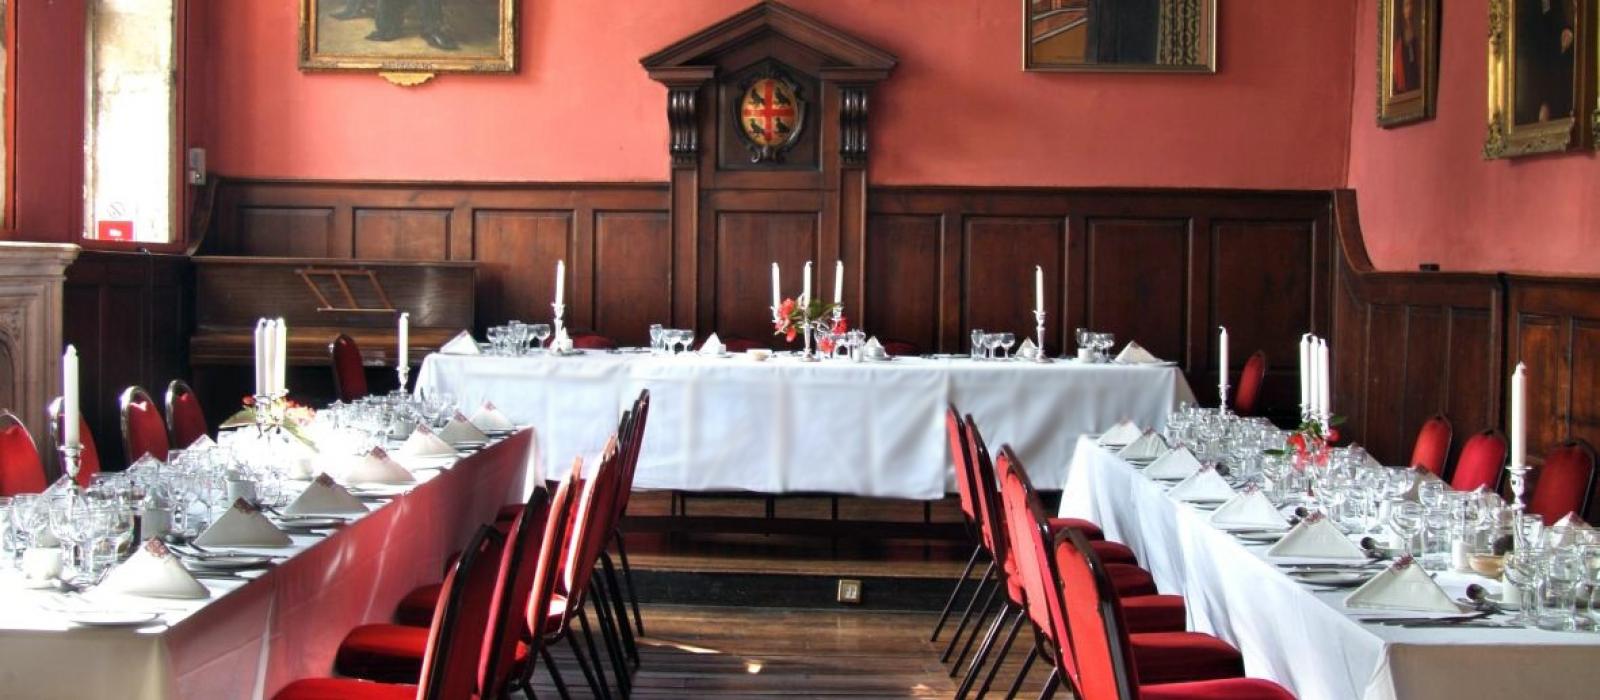 Old dining hall, St Edmund Hall